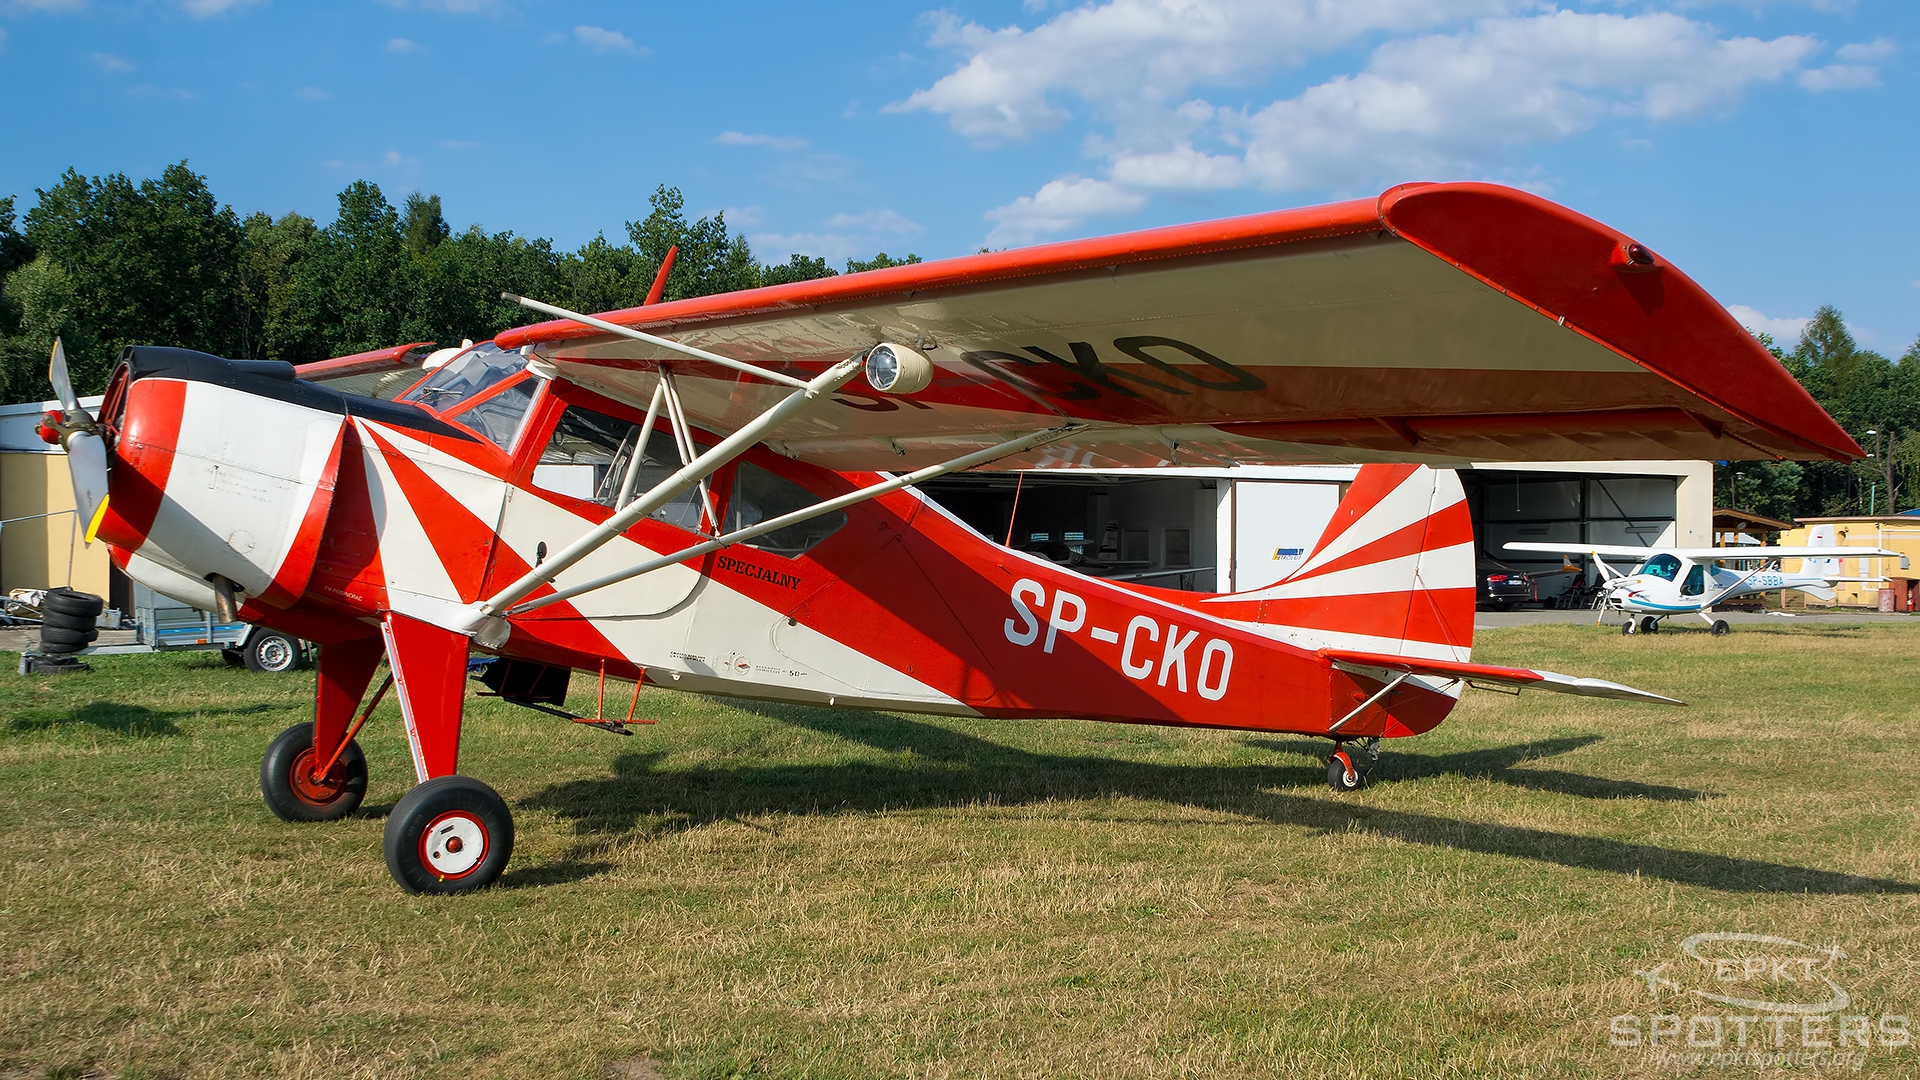 SP-CKO - PZL 101 A Gawron (Aeroklub ROW) / Gotartowice - Rybnik - Rybnik Poland [EPRG/]